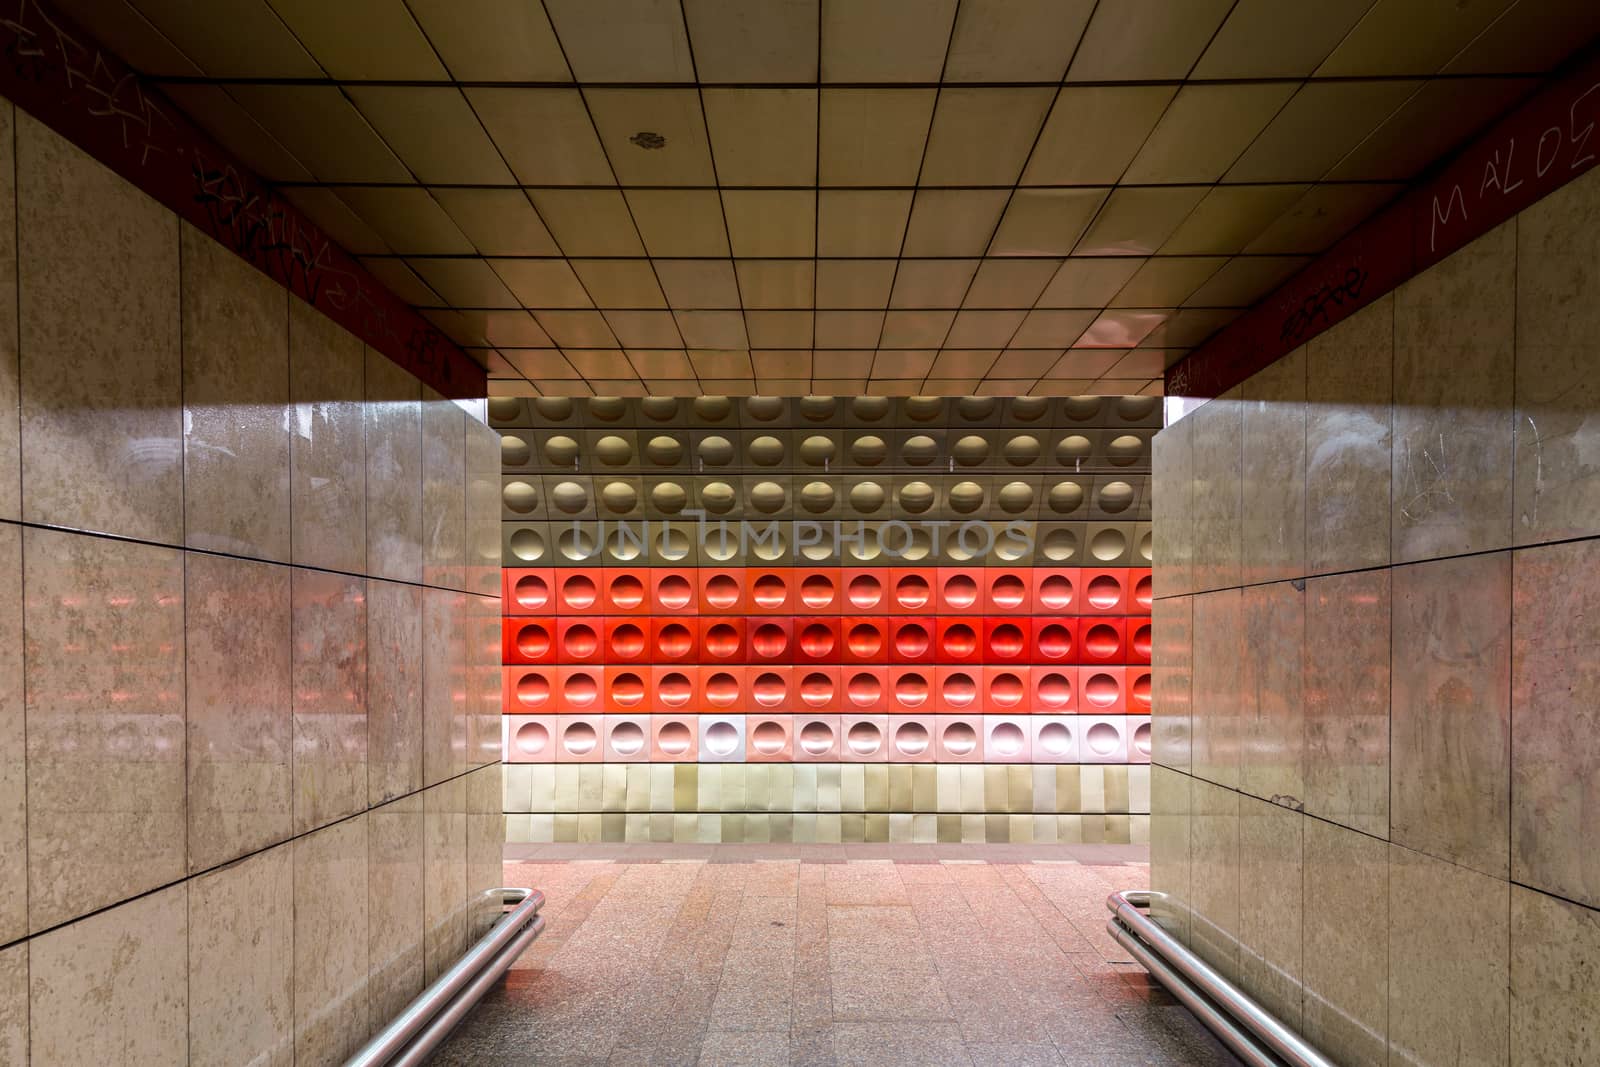 Prague, Czech Republic - March 20, 2017: Interior view of Staromestska metro station